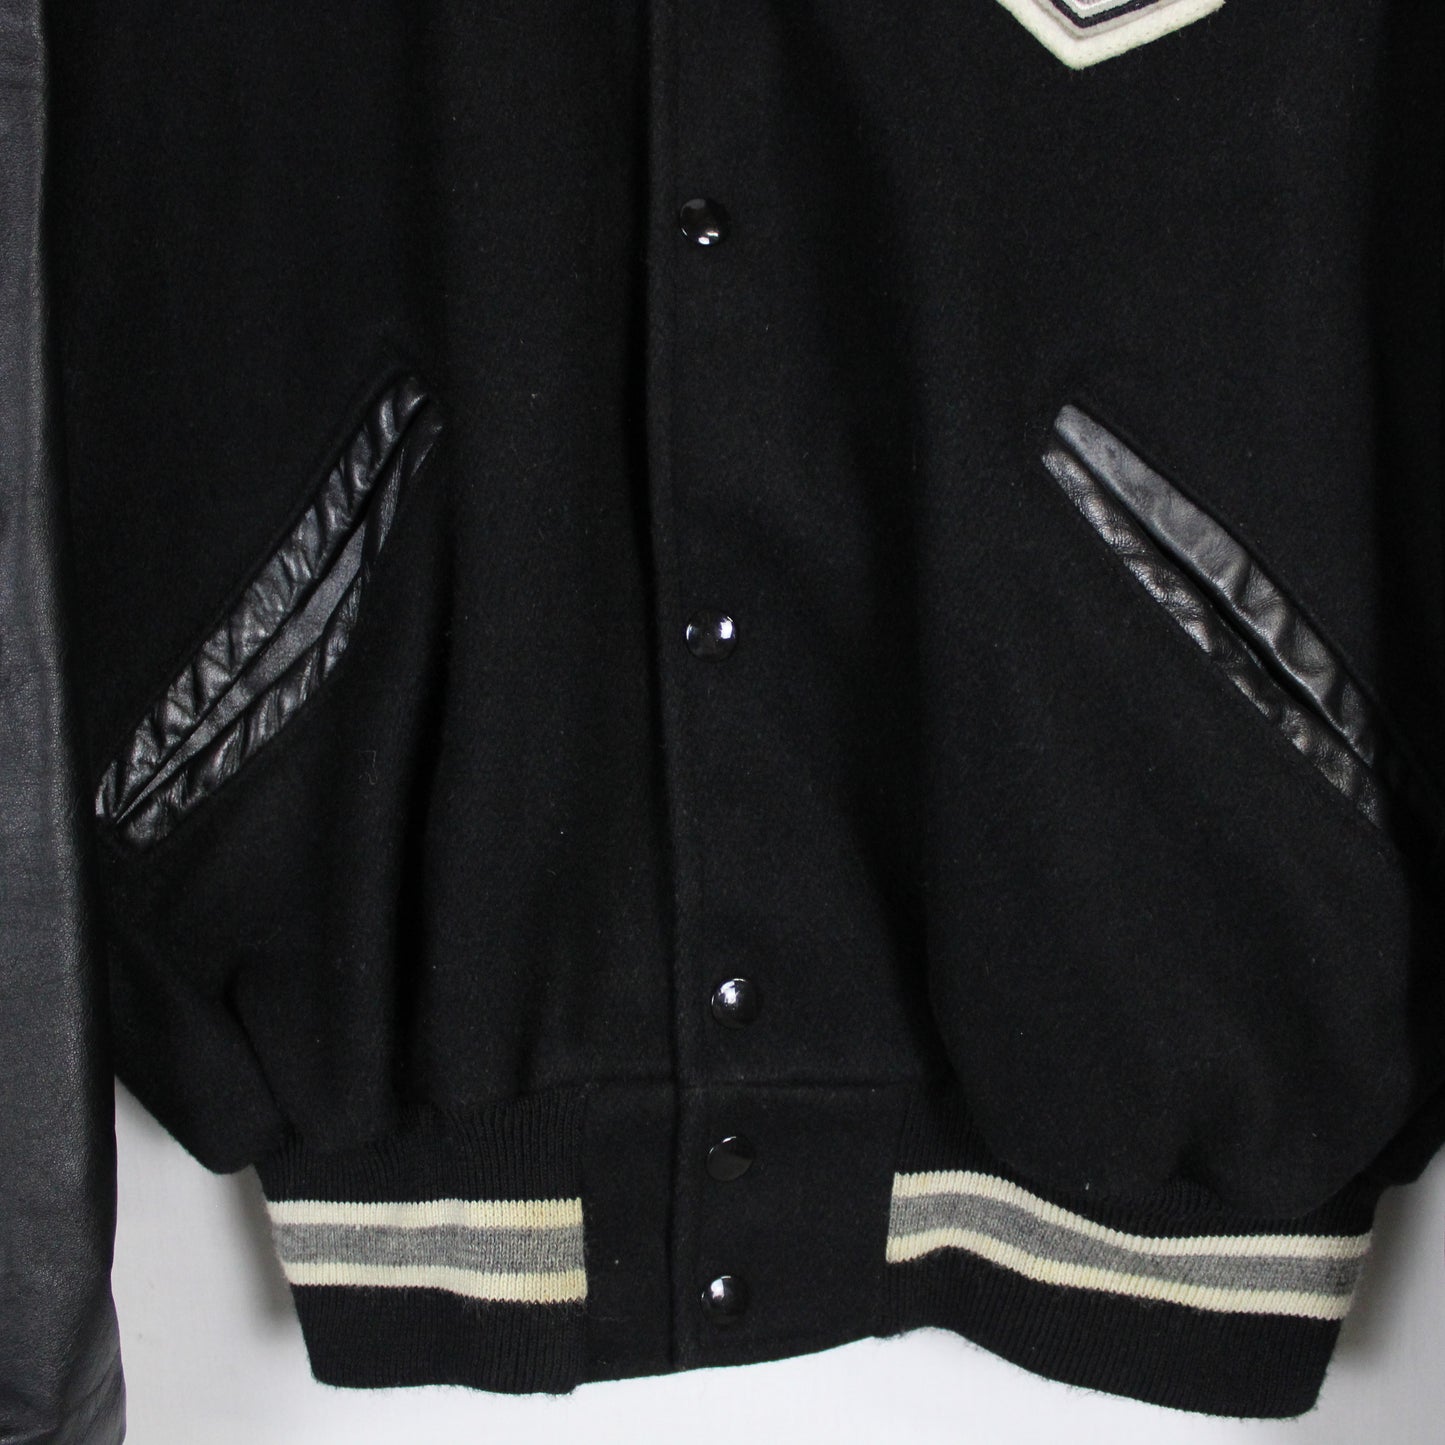 Vintage L.A Kings NHL Letterman Jacket - L